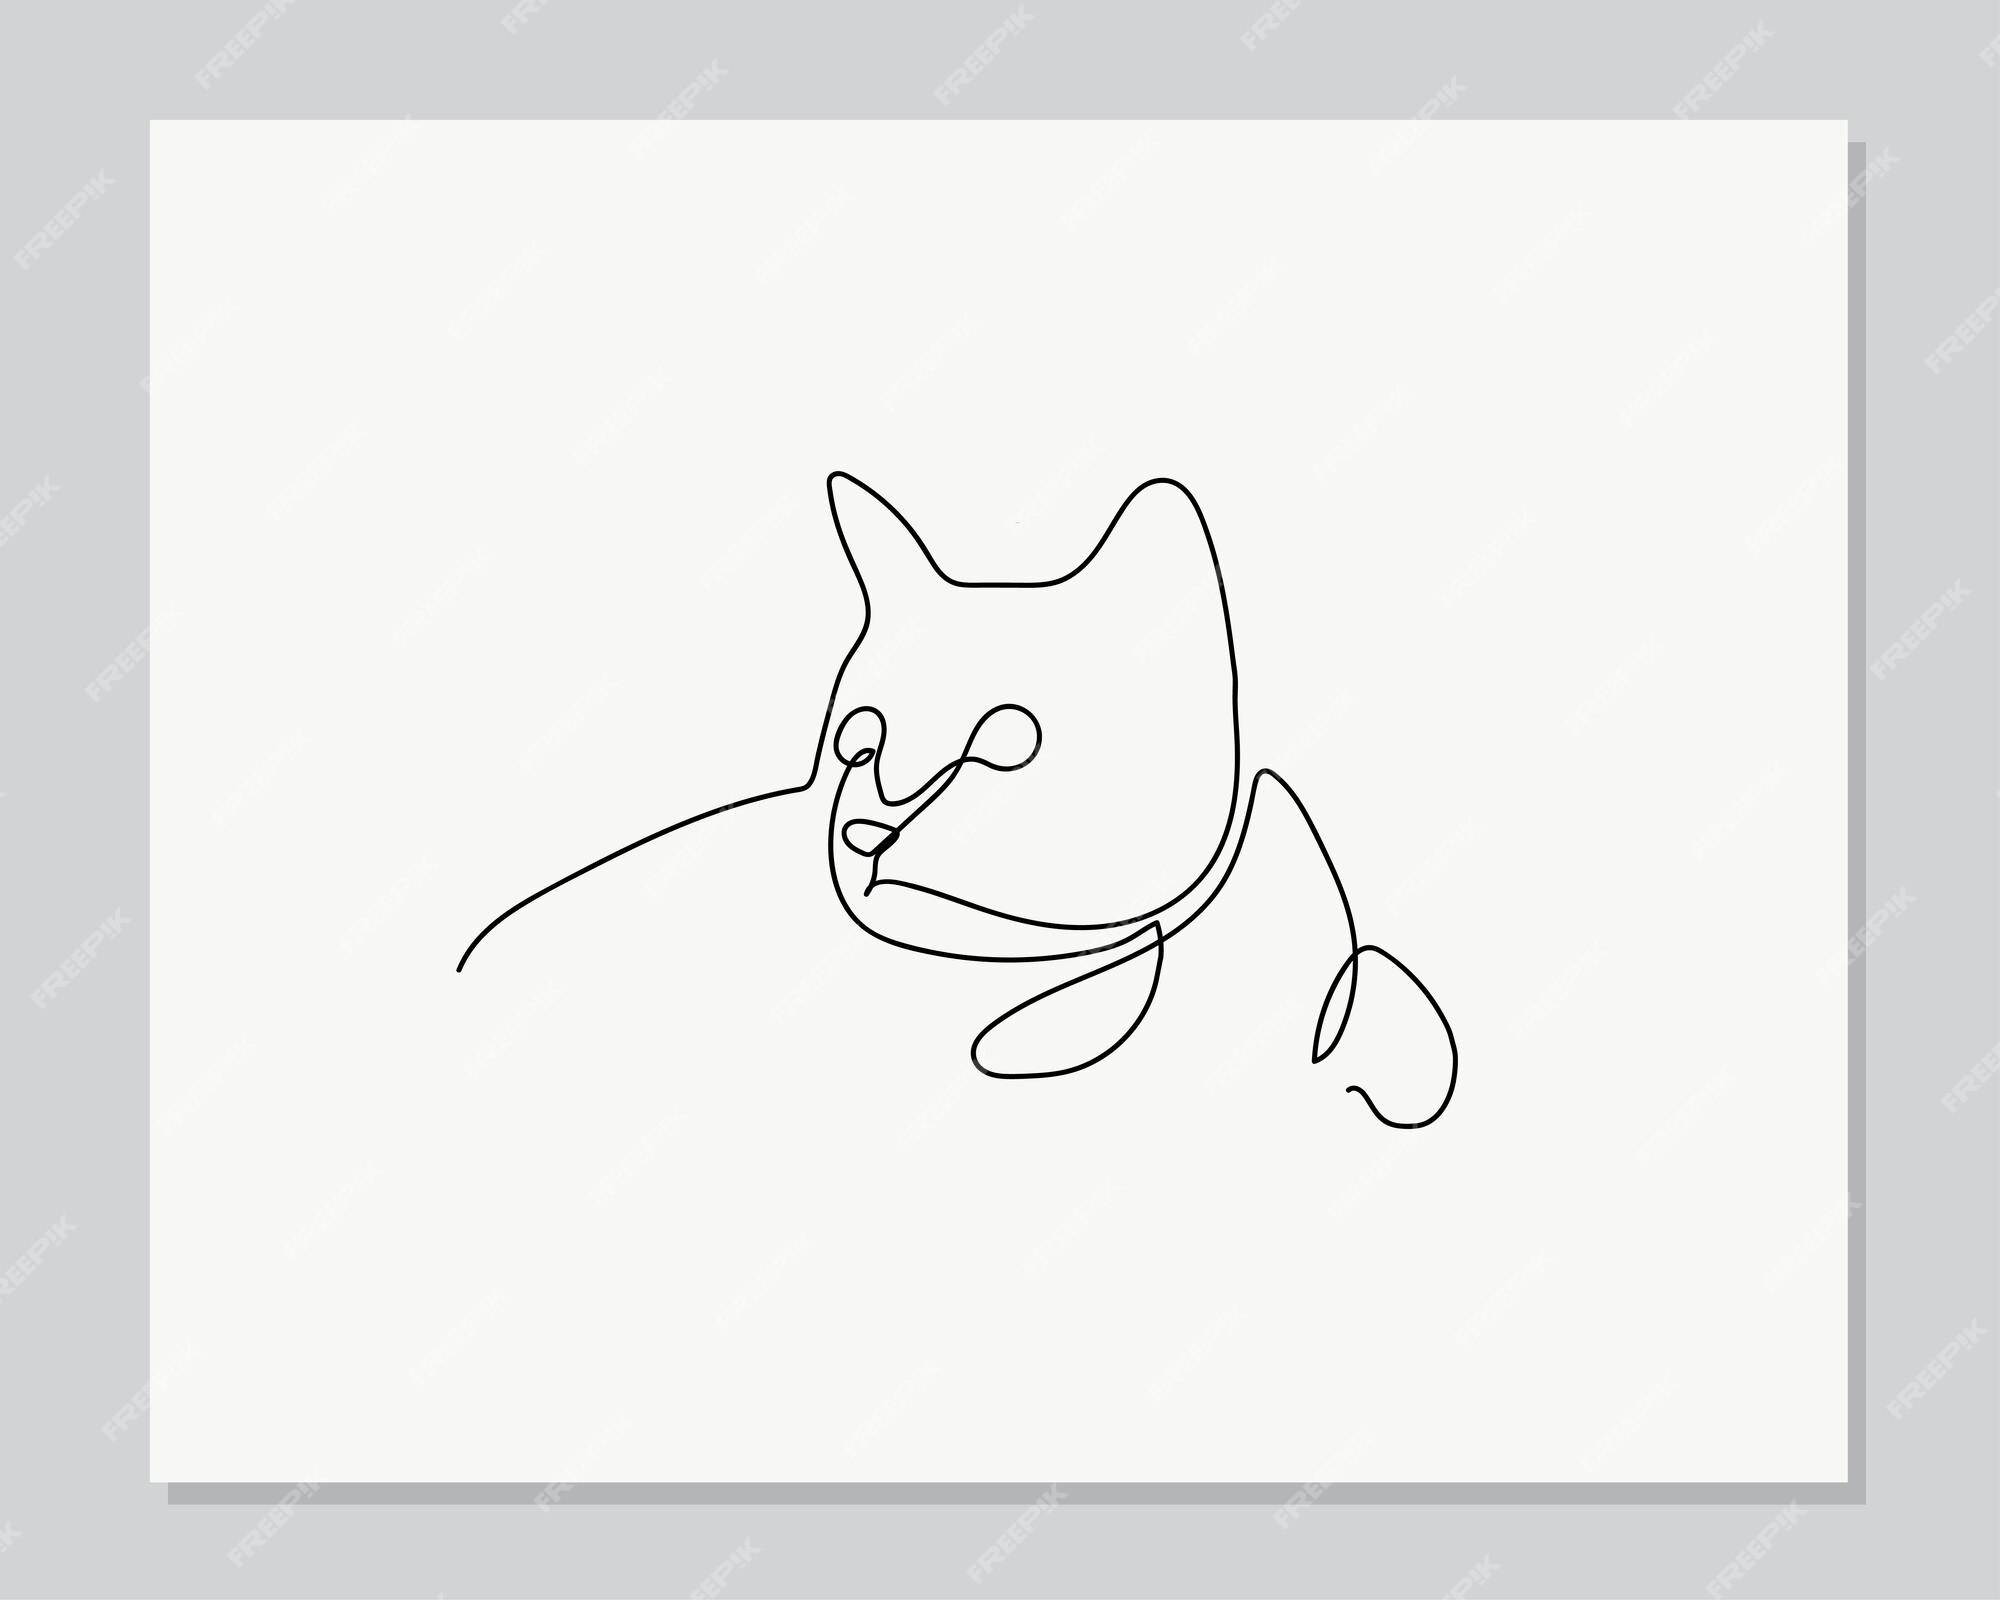 Cat Line Drawing Images - Free Download on Freepik